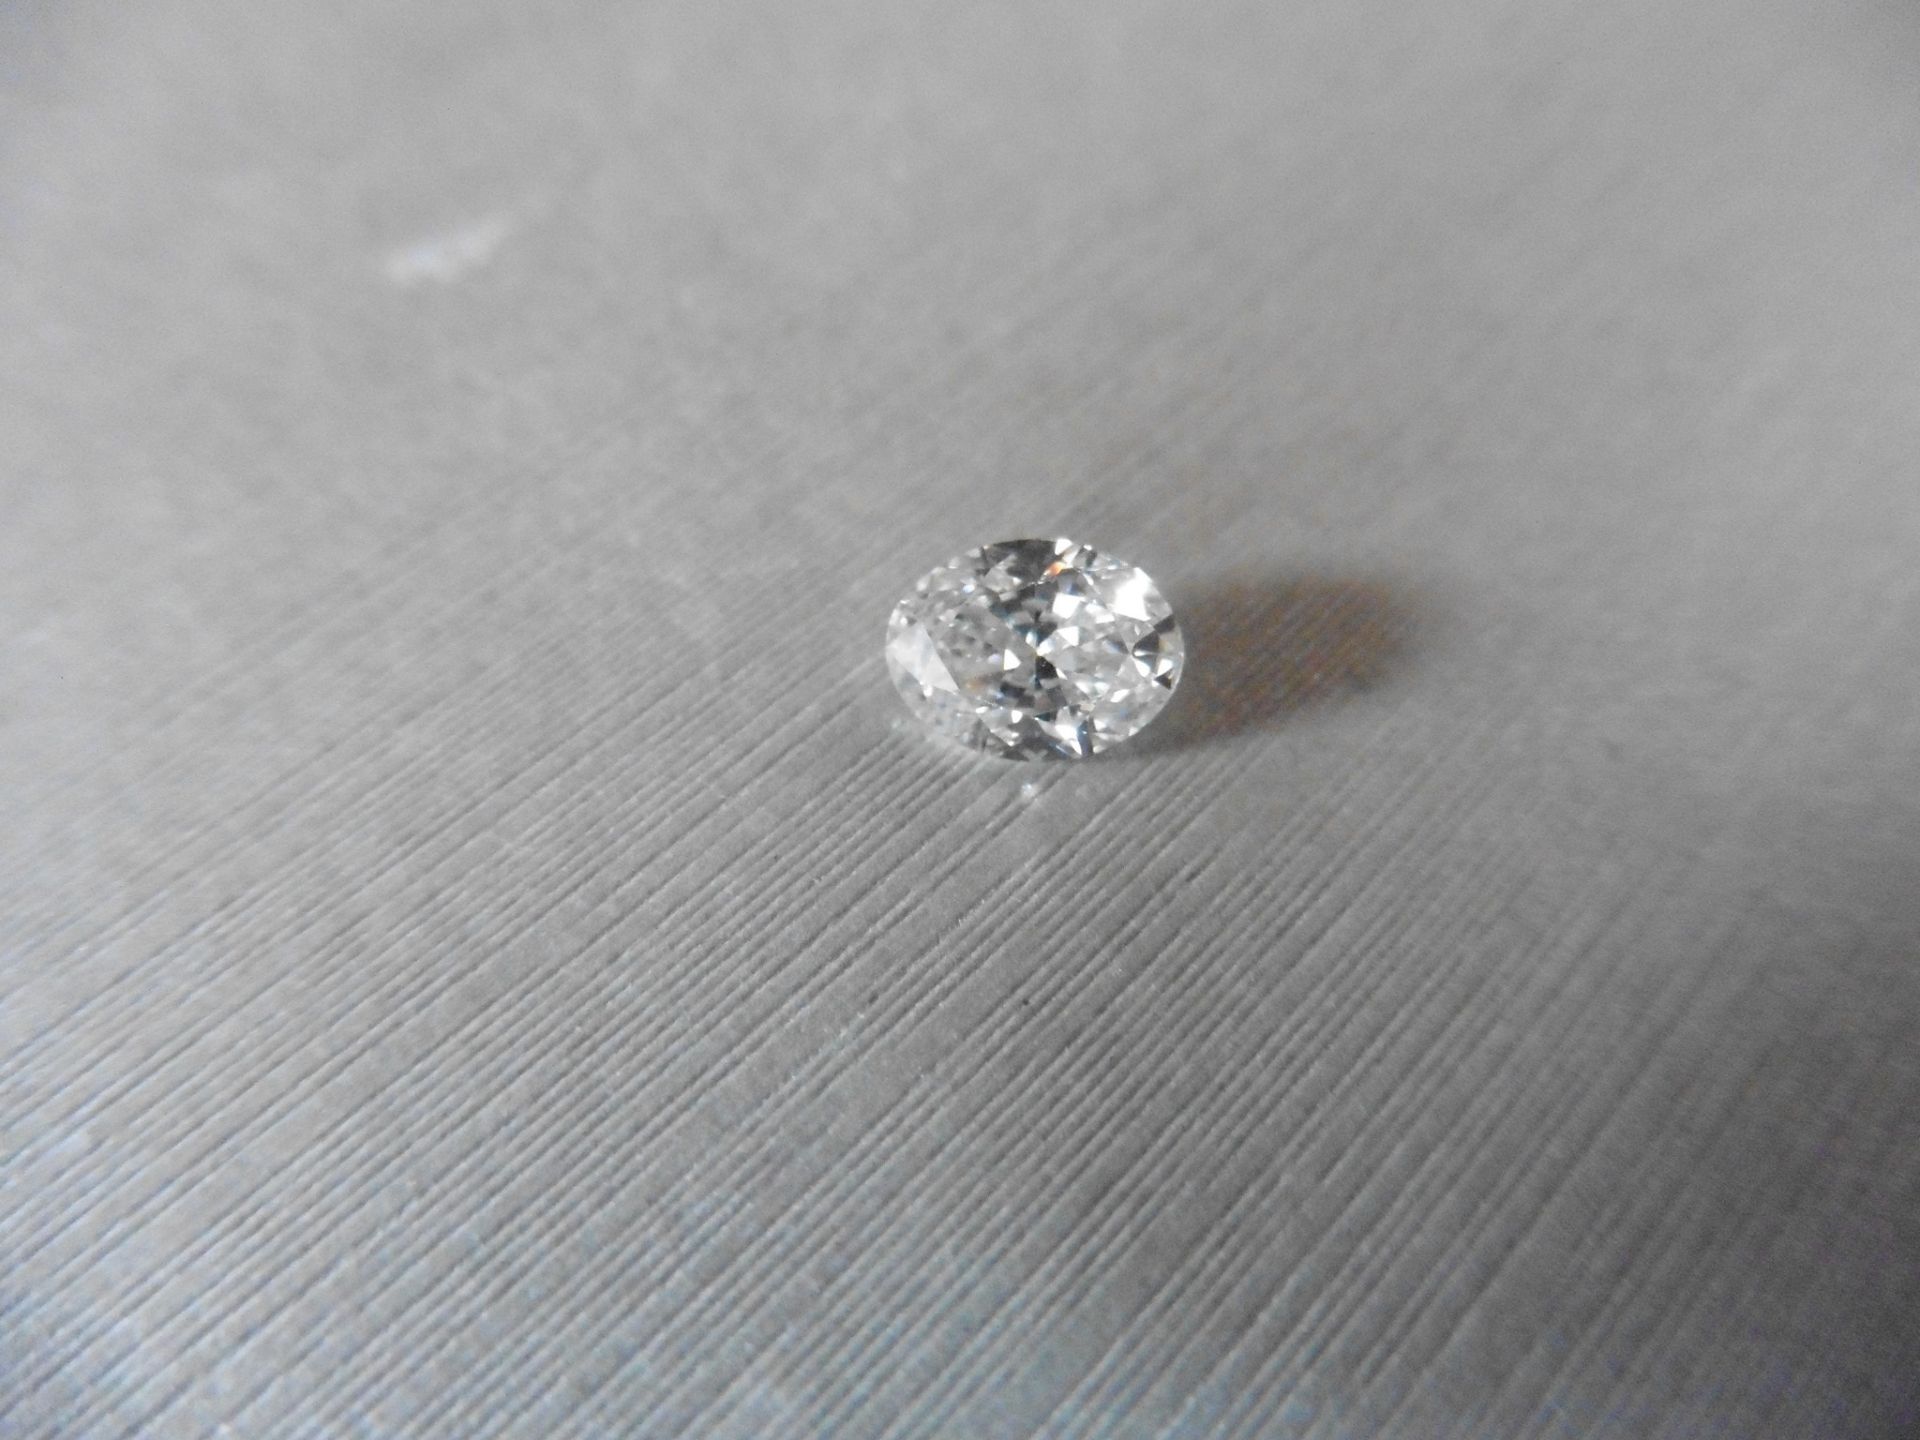 1.00ct single oval cut diamond, F colour and VS2 clarity. Measures 7.32 x 5.47 x 3.54mm. GIA